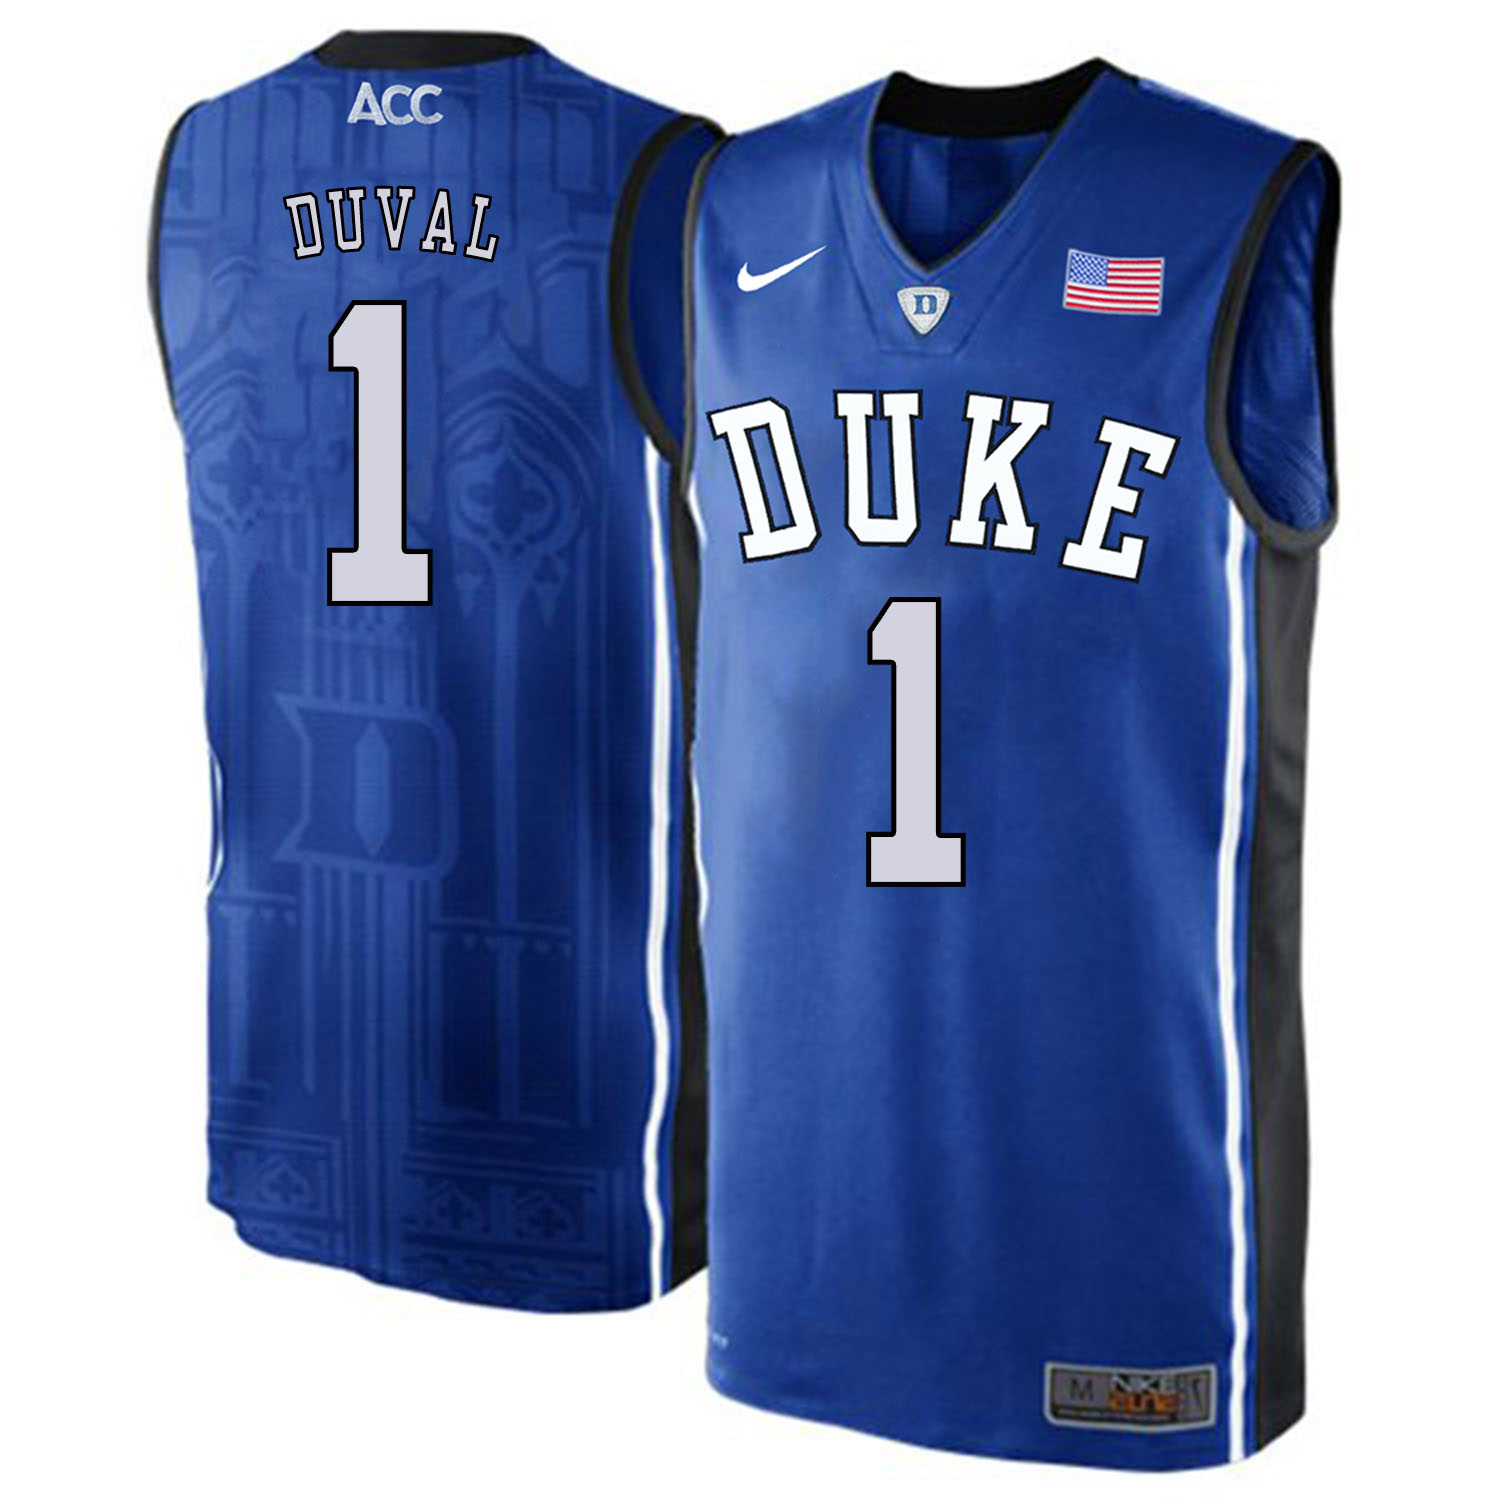 Duke Blue Devils 1 Trevon Duval Blue Elite Nike College Basketabll Jersey